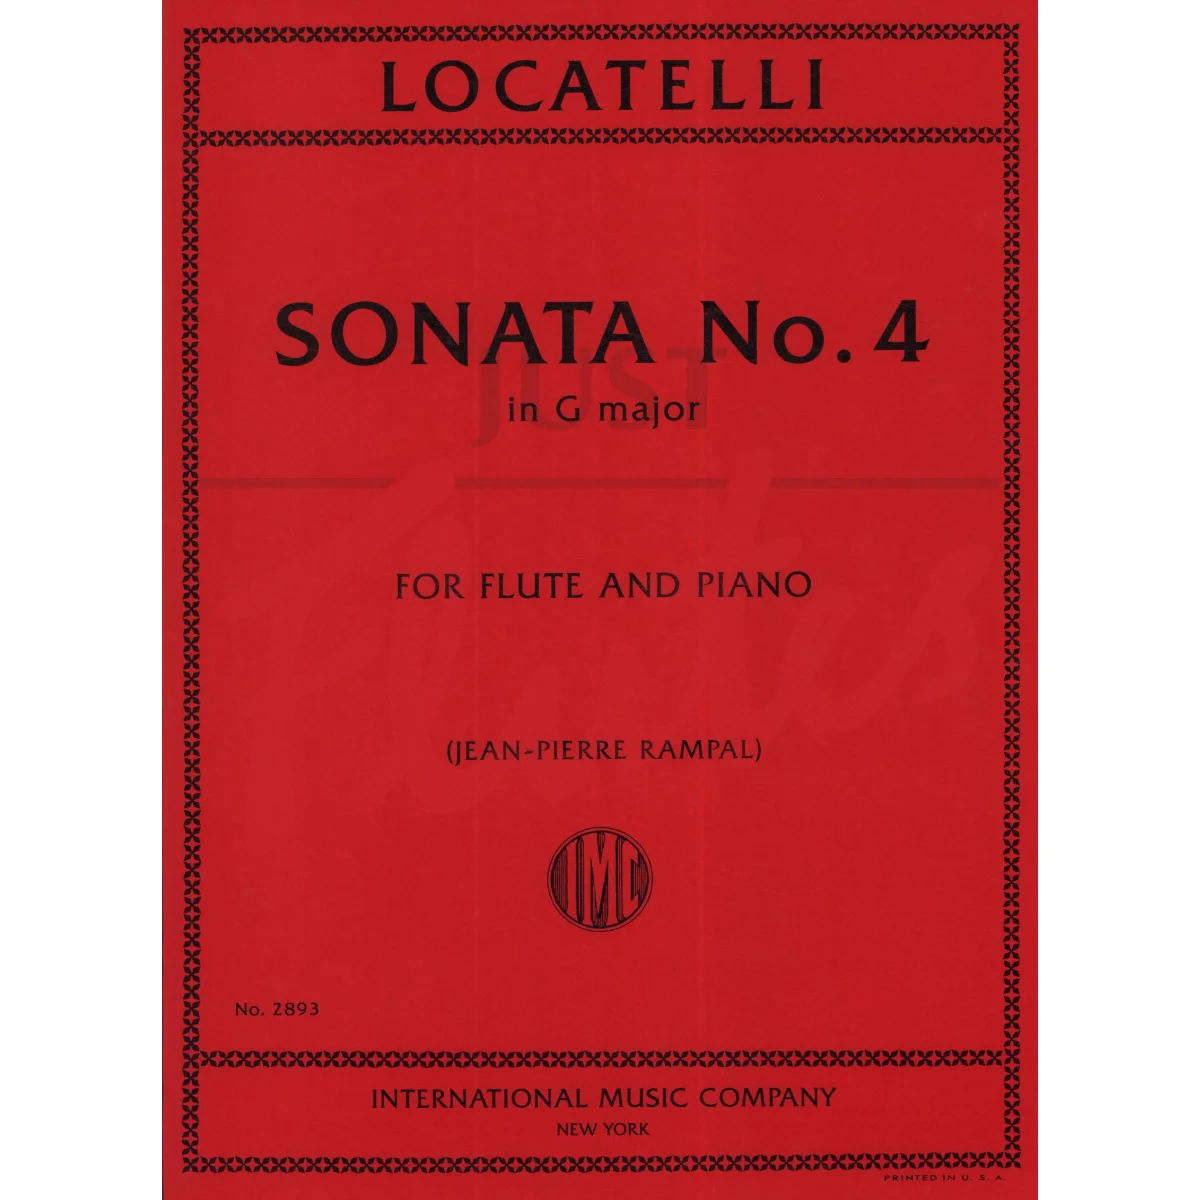 Sonata No. 4 in G major for Flute and Piano